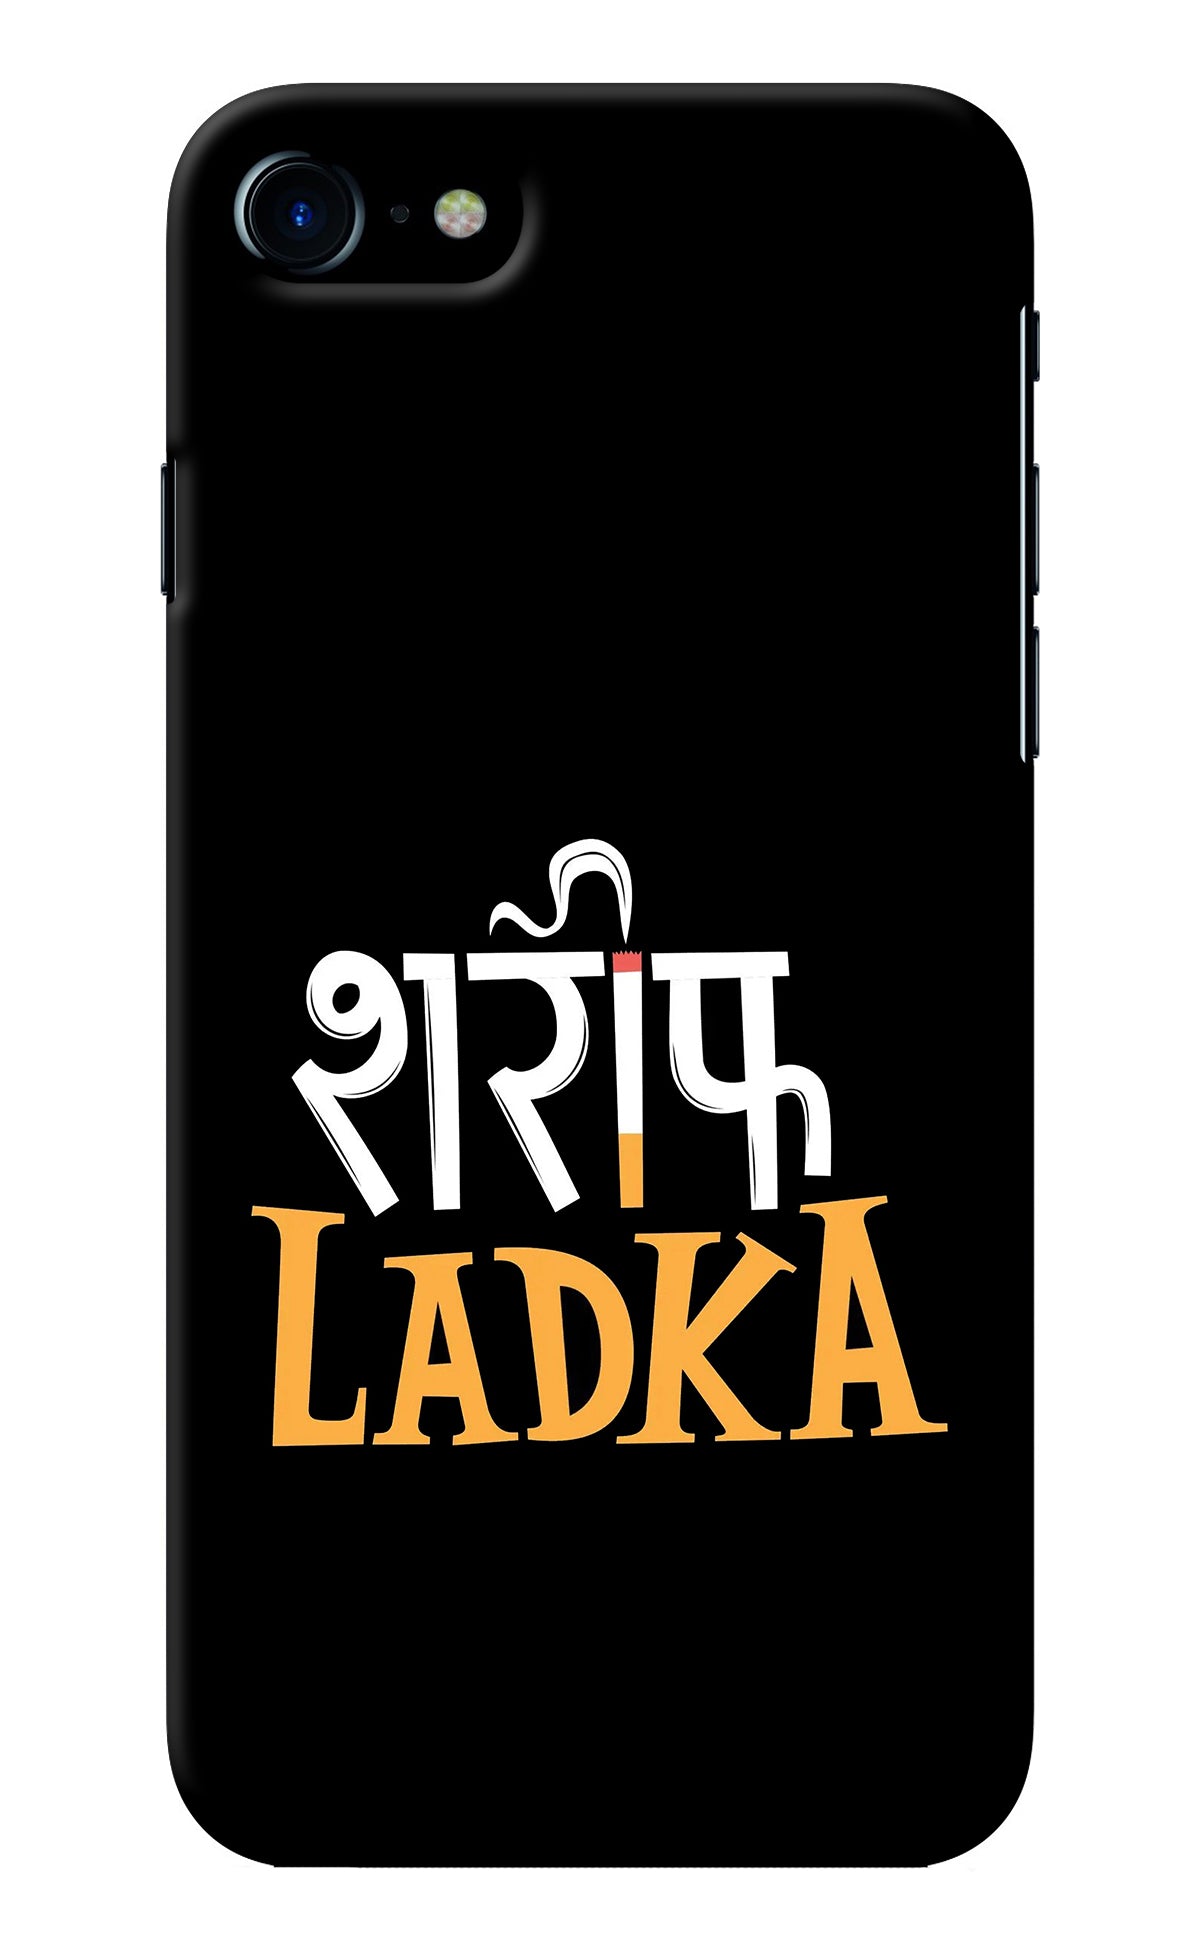 Shareef Ladka iPhone 8/SE 2020 Back Cover